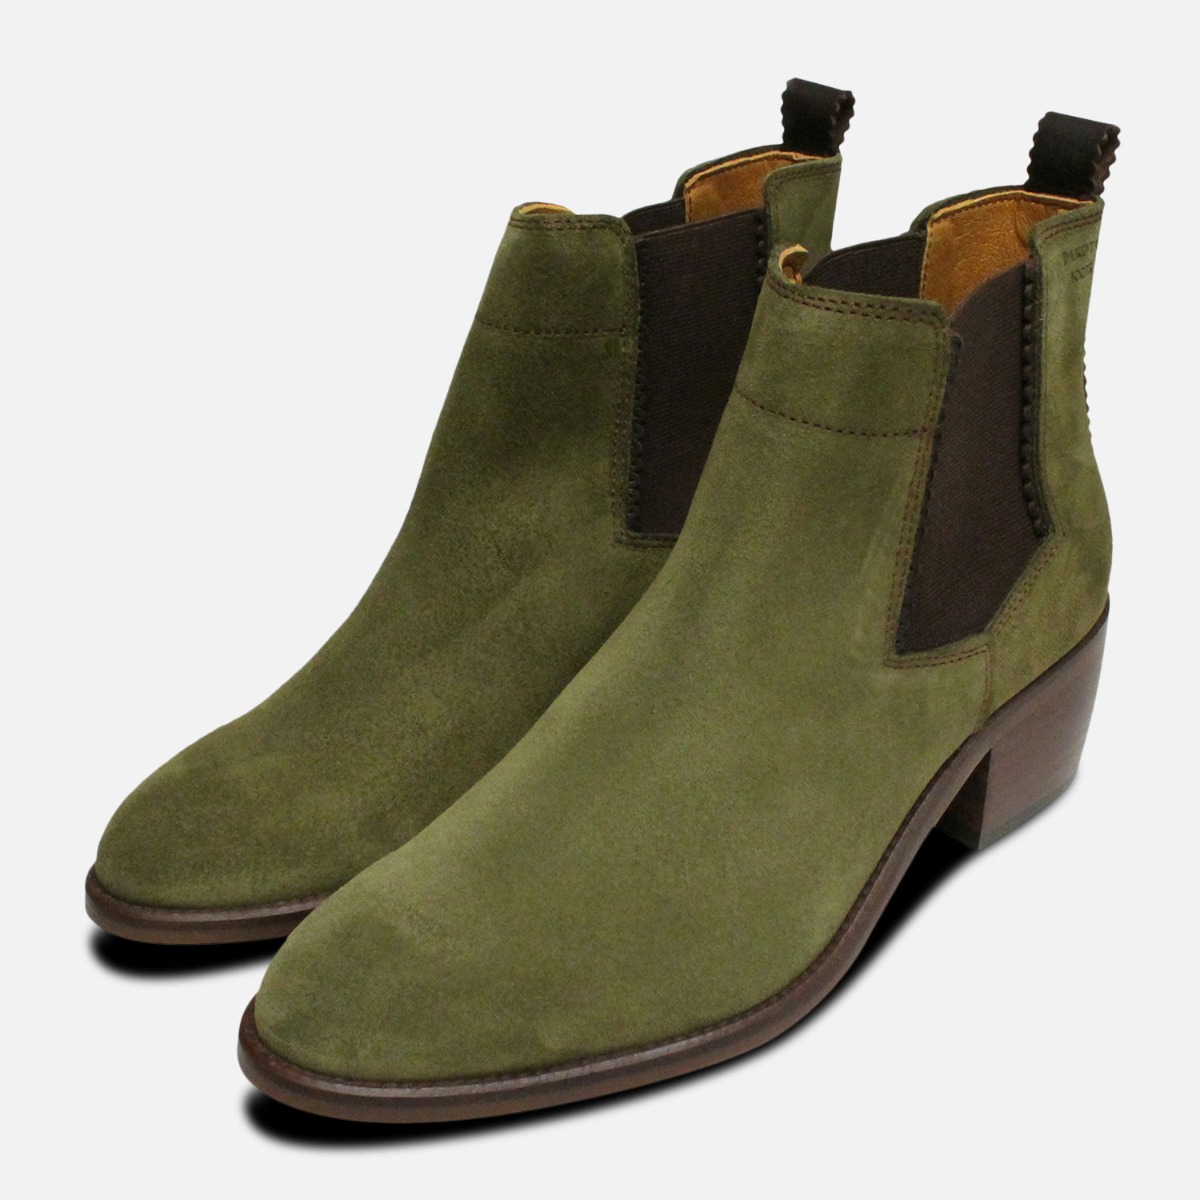 Cuban Heel Chelsea Boots in Moss Green Suede | eBay